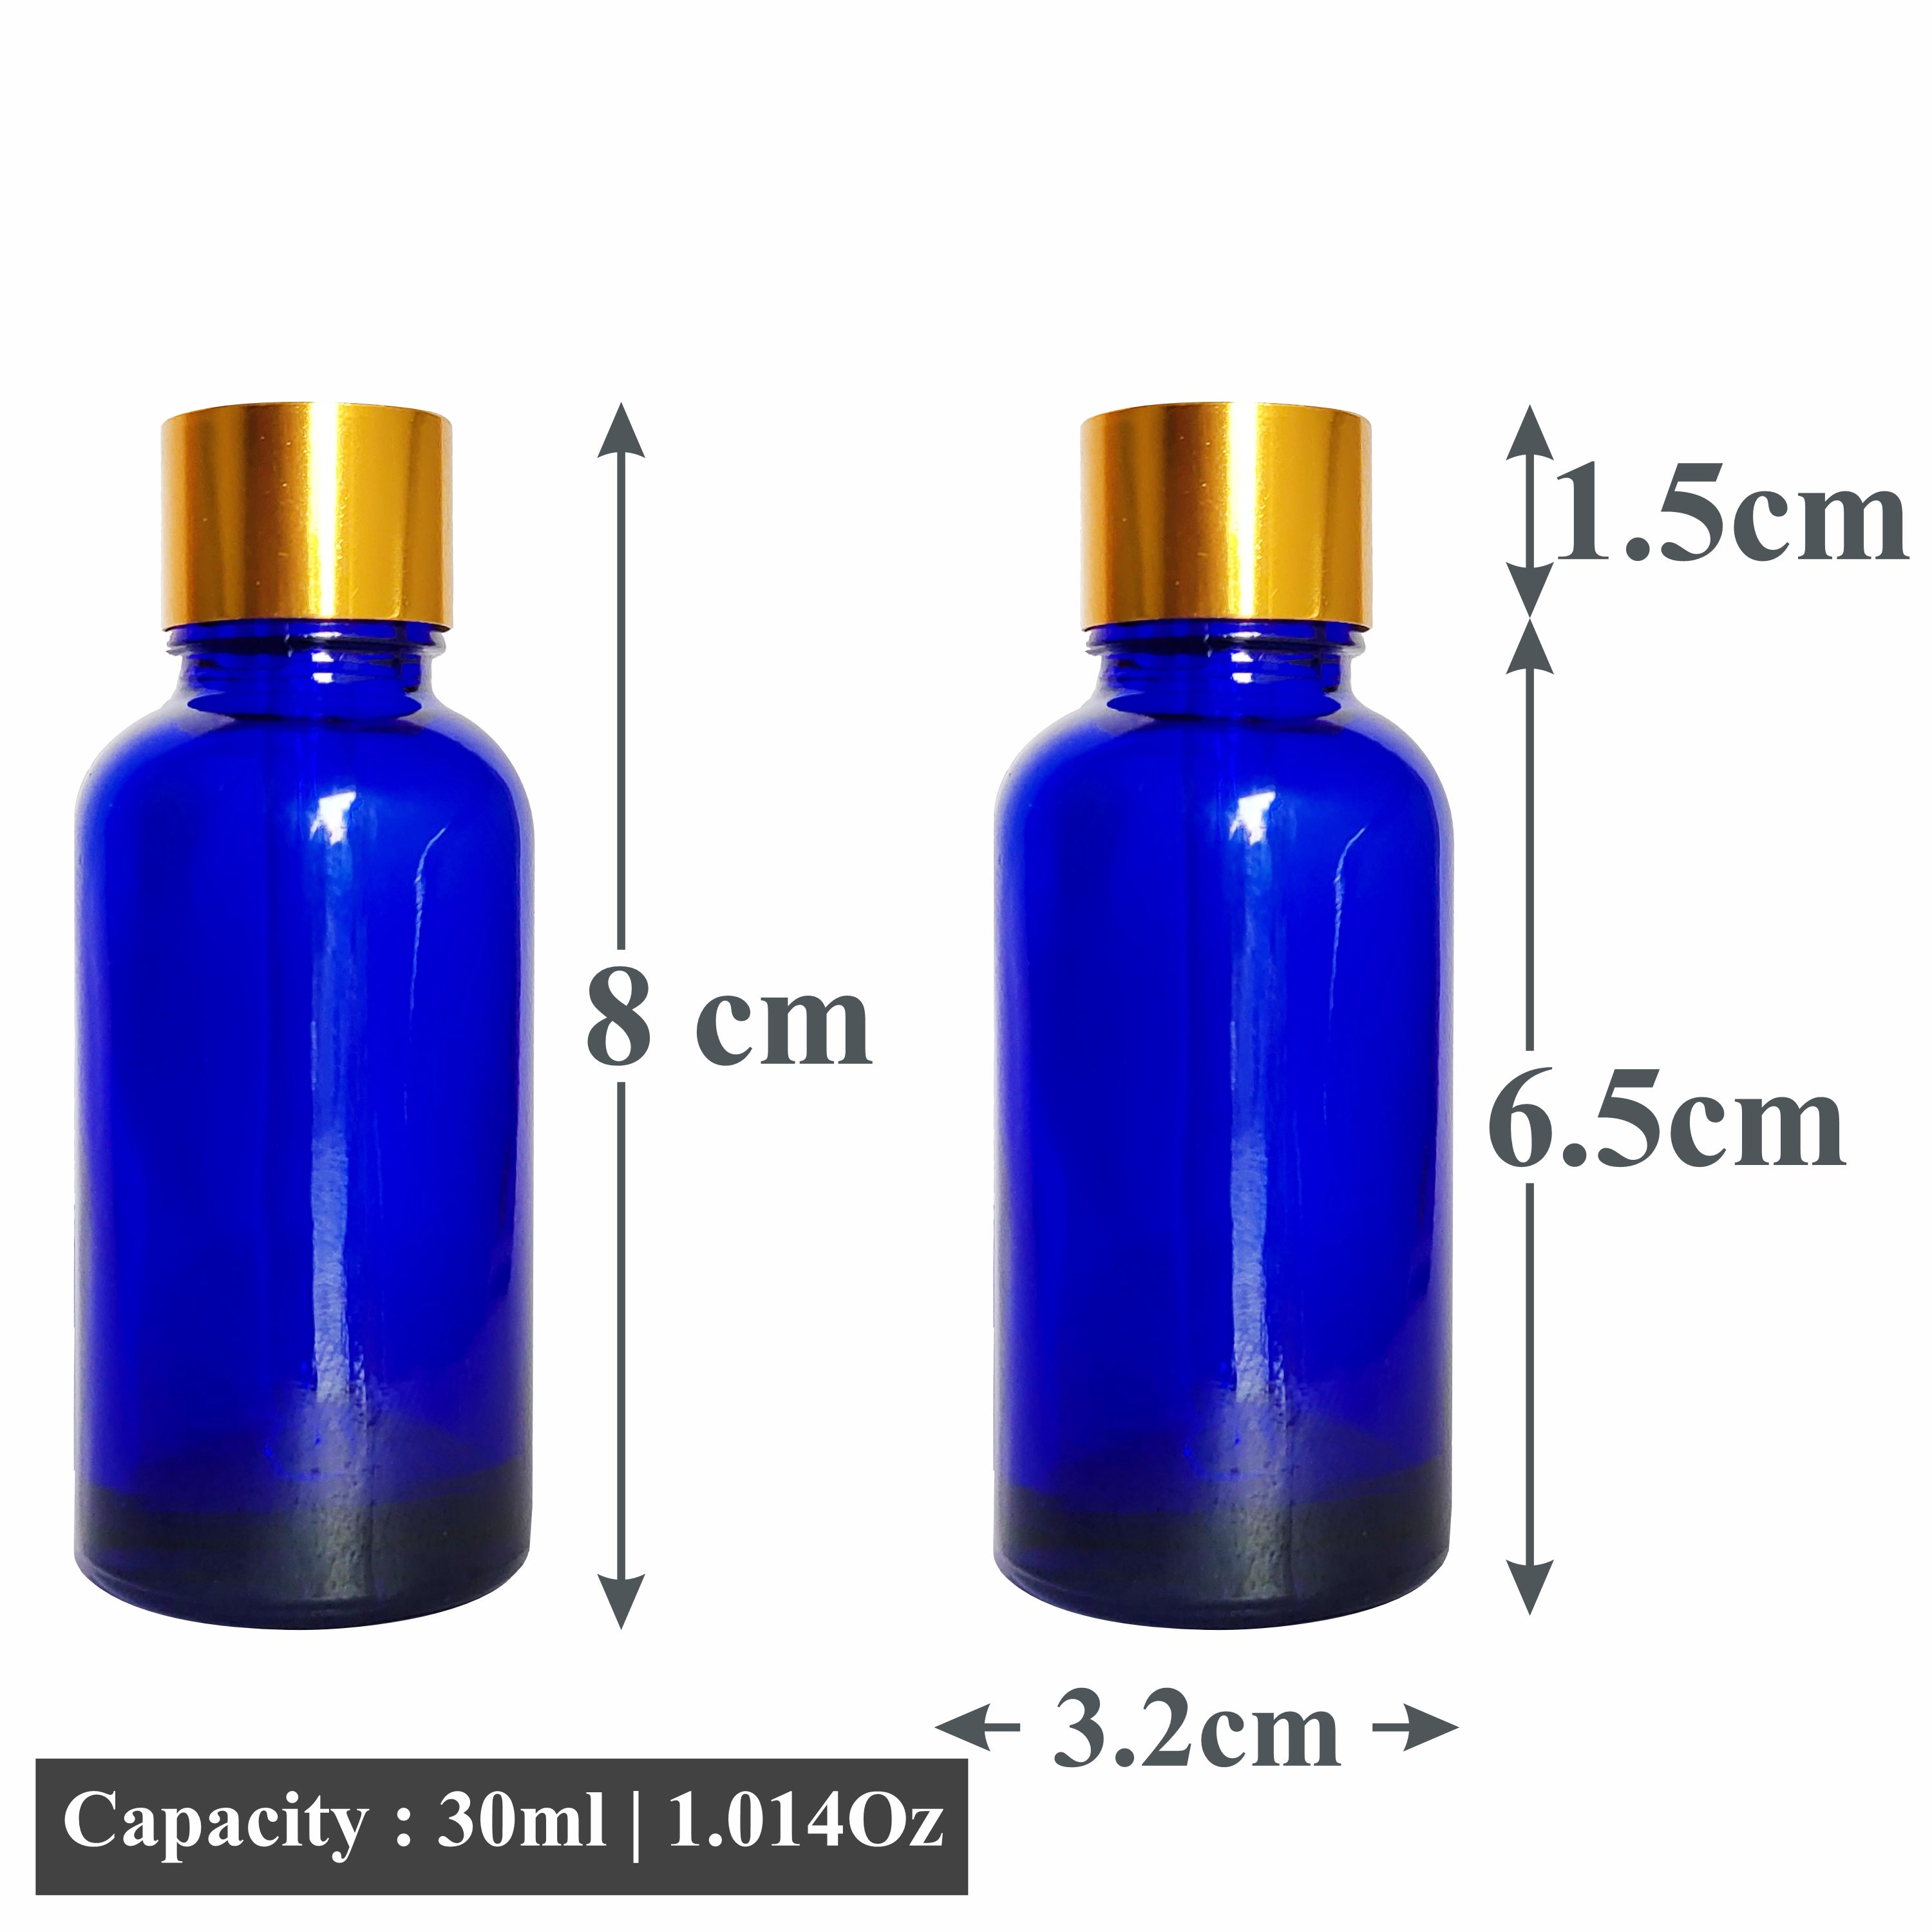 Blue Color Bottle With Golden Screw Cap-25ml,30ml [ZMG11]